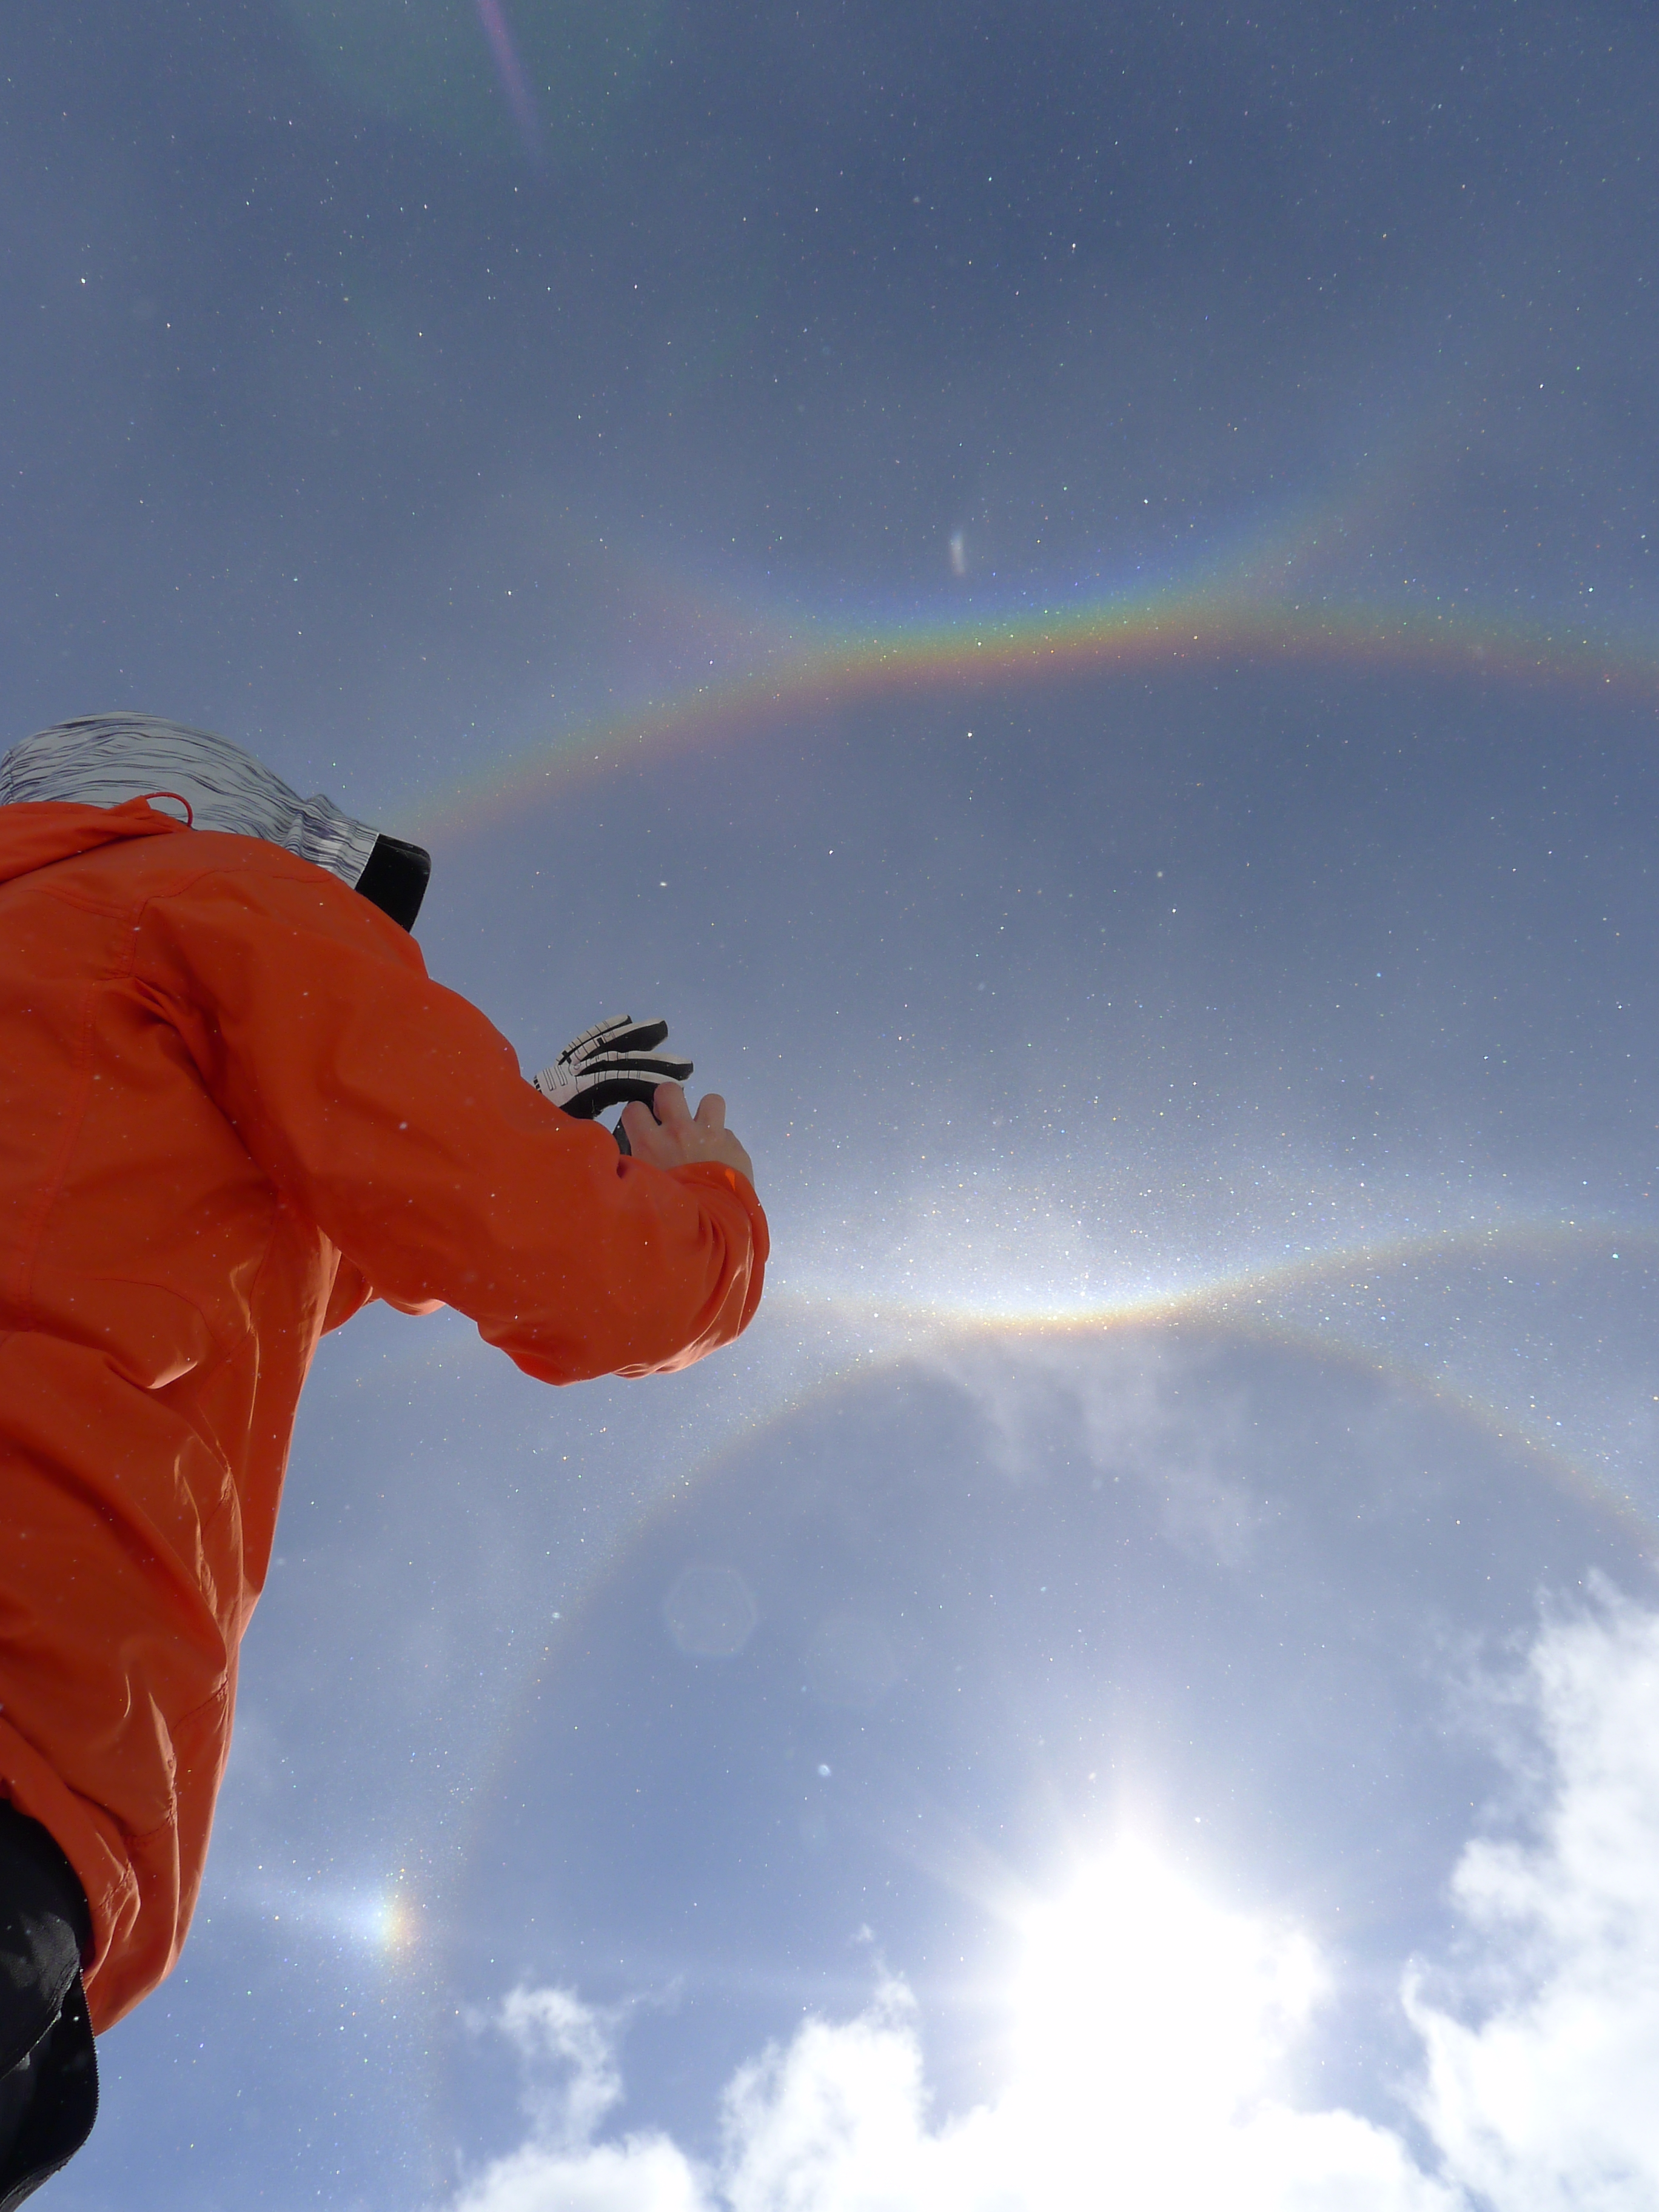 A volunteer ranger attempts to capture in the interlocking rainbows on camera